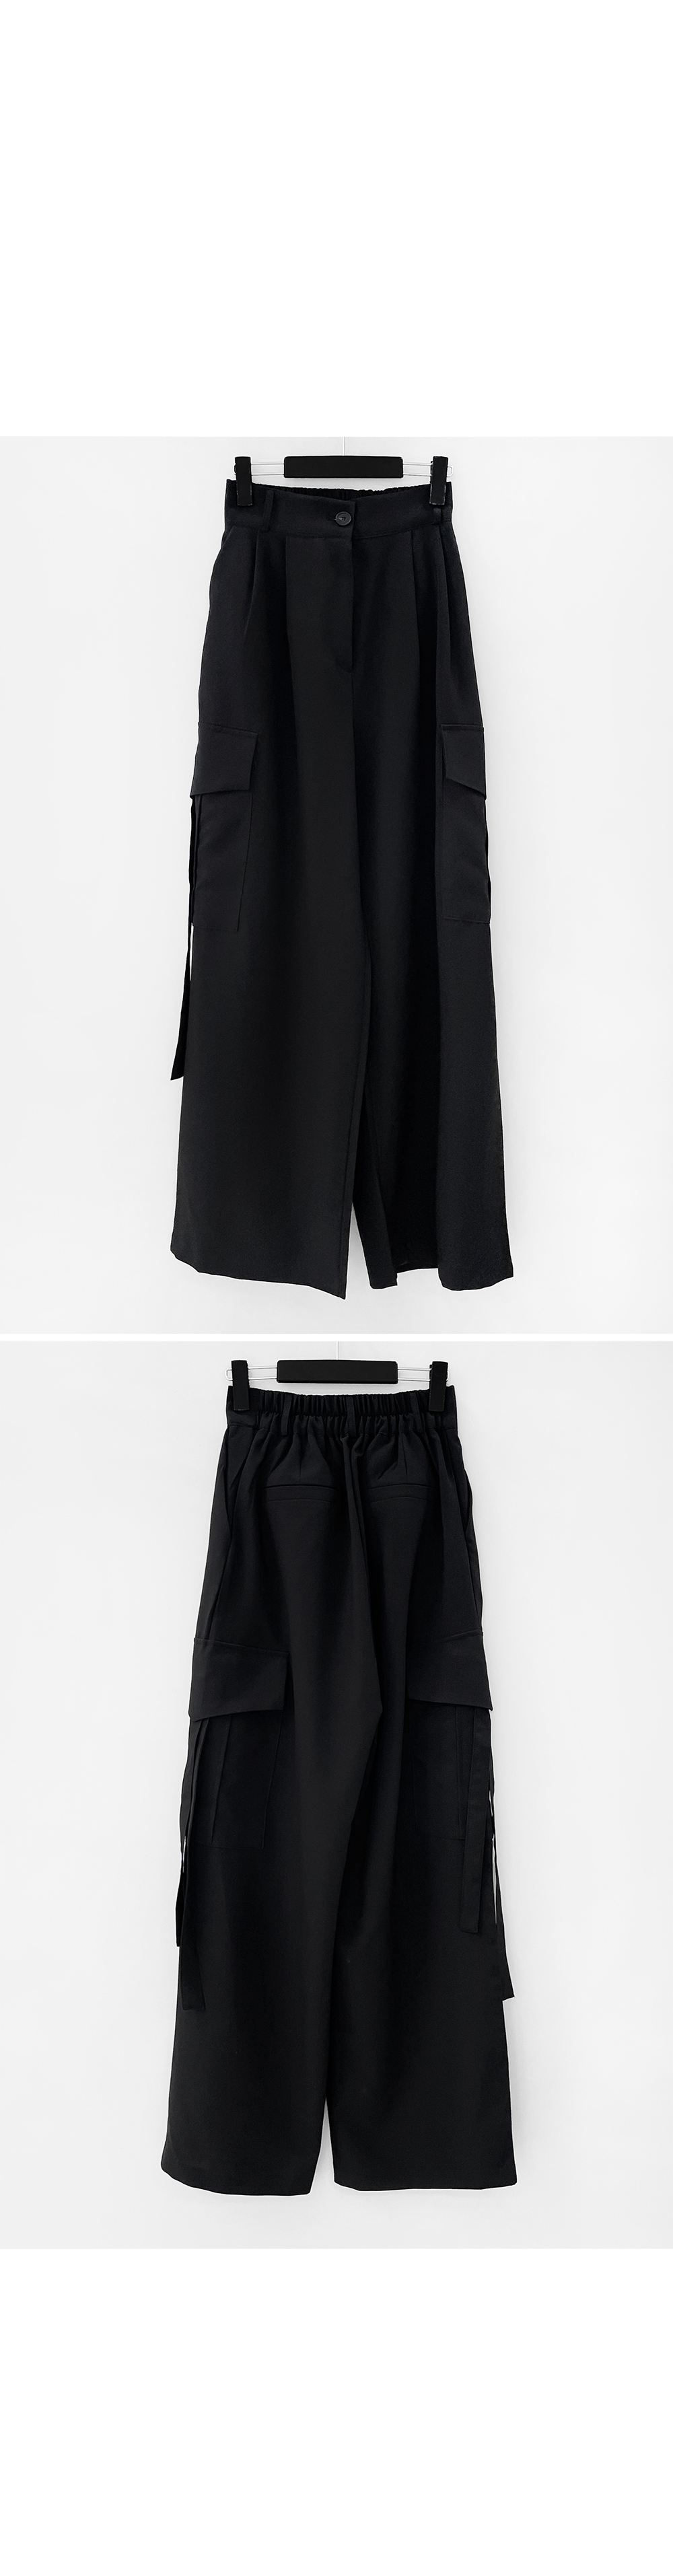 long skirt charcoal color image-S1L11